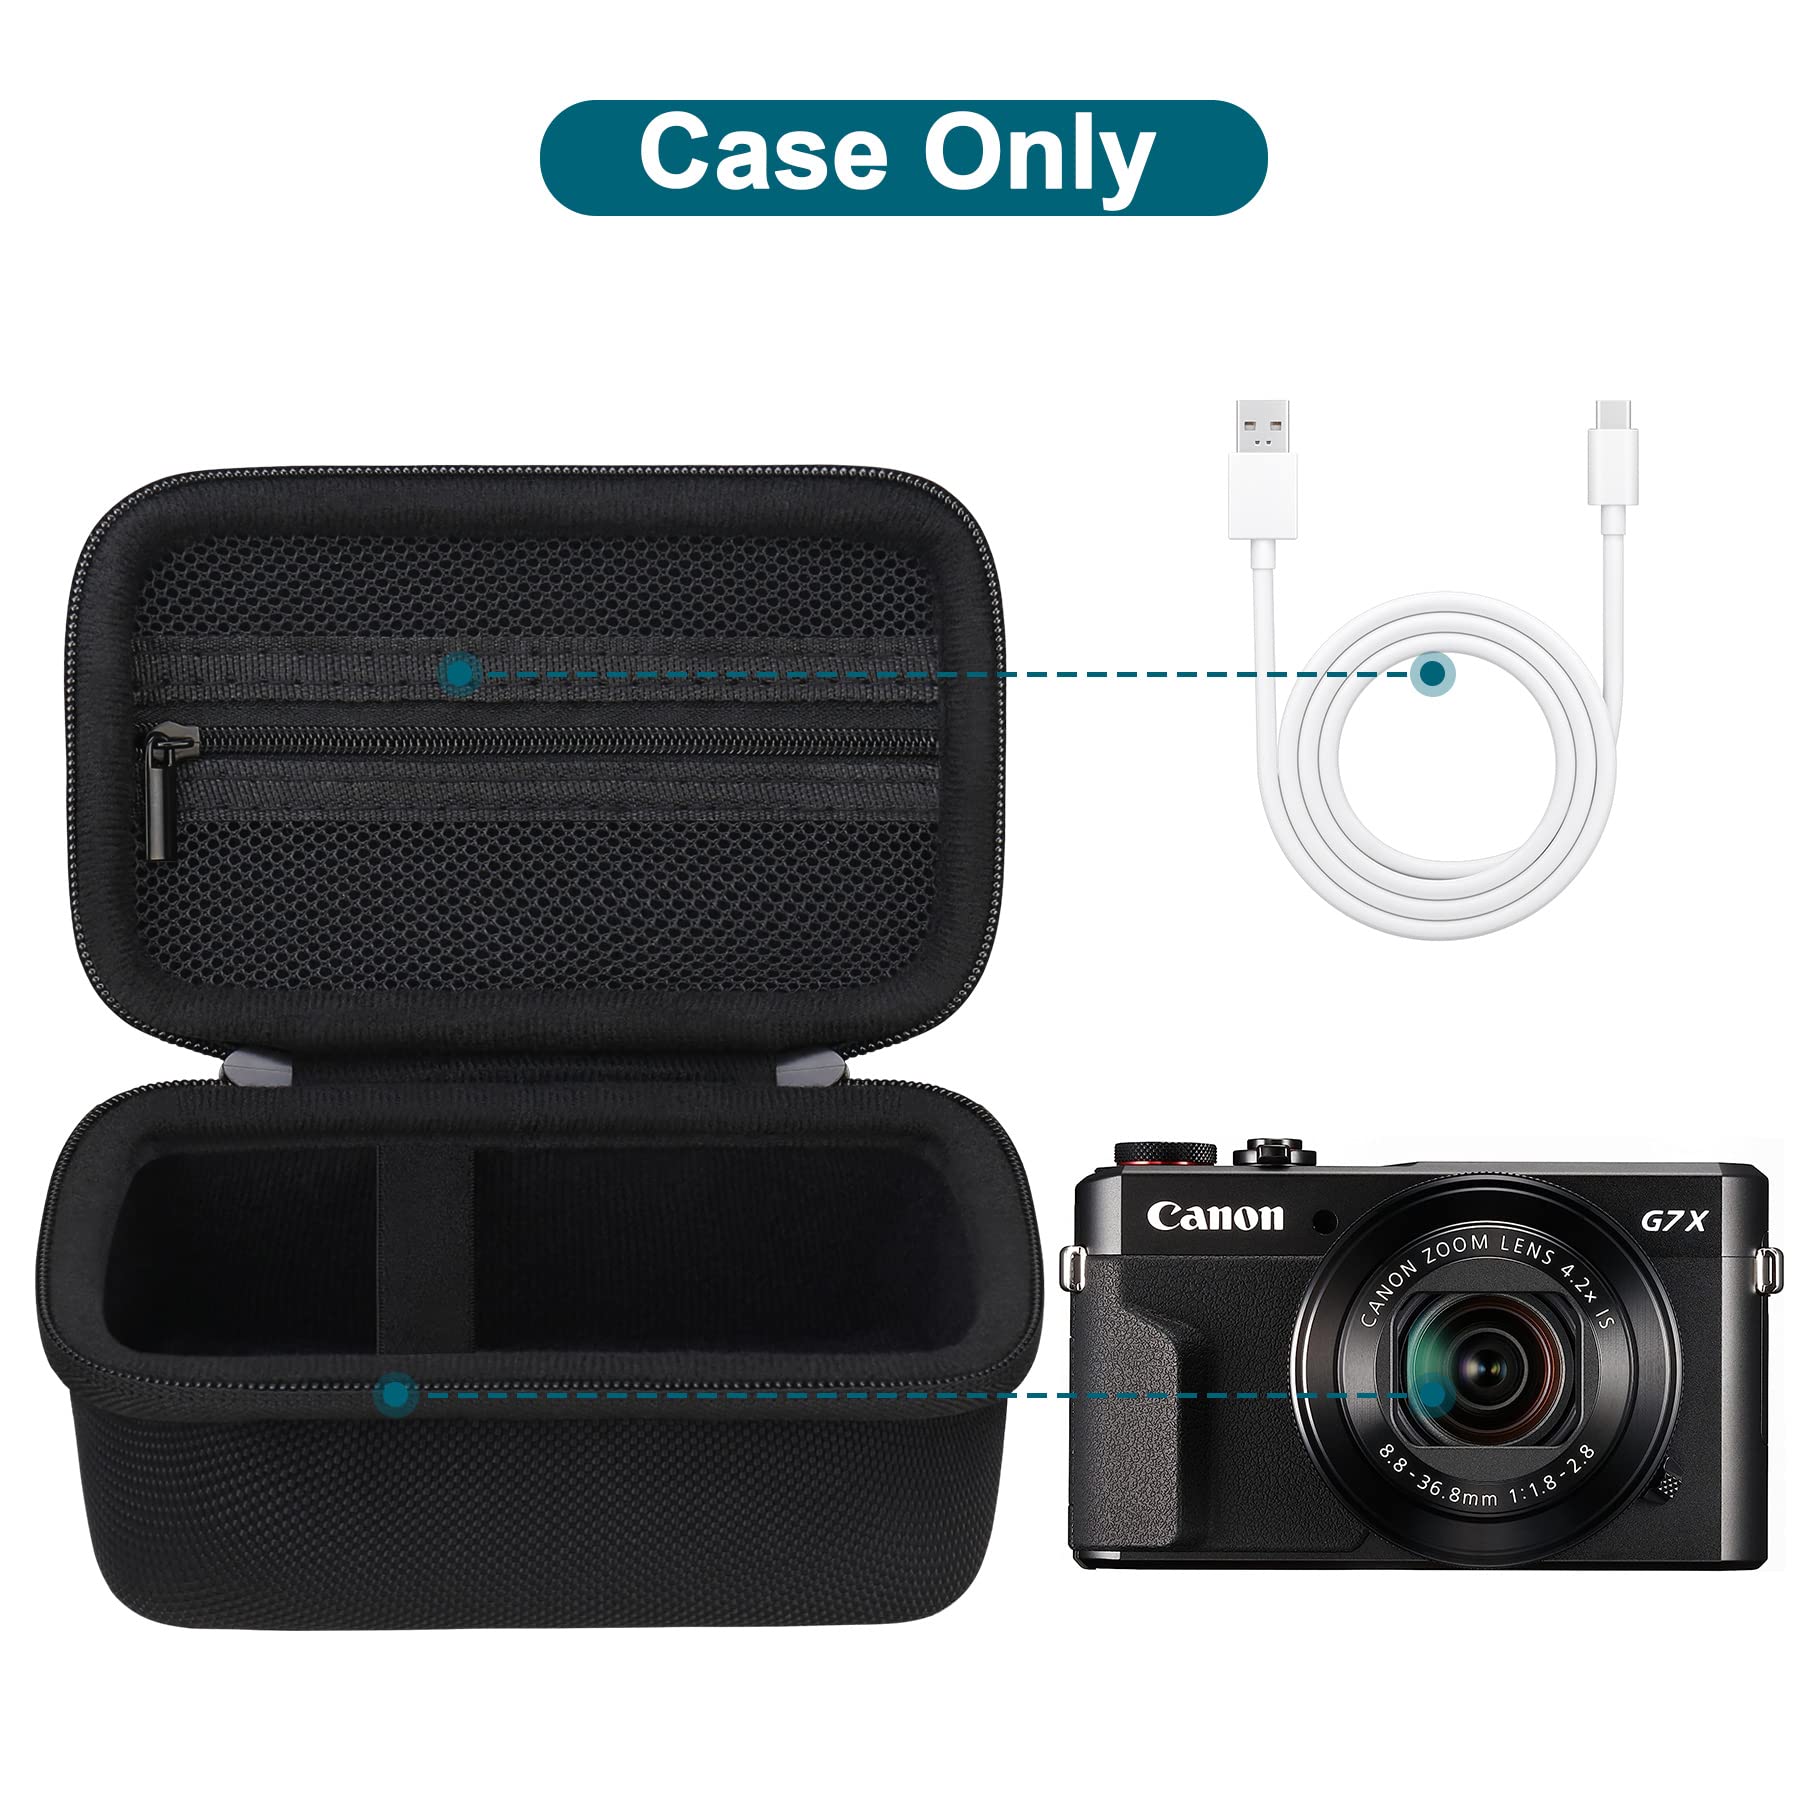 Canboc Camera Case for Canon PowerShot G7 X Mark II/ G7X Mark III Digital 4K Vlogging Camera, Point and Shoot 4K Video Camera Bag, Zipper Mesh Pocket fits USB Cable, Batteries, Black